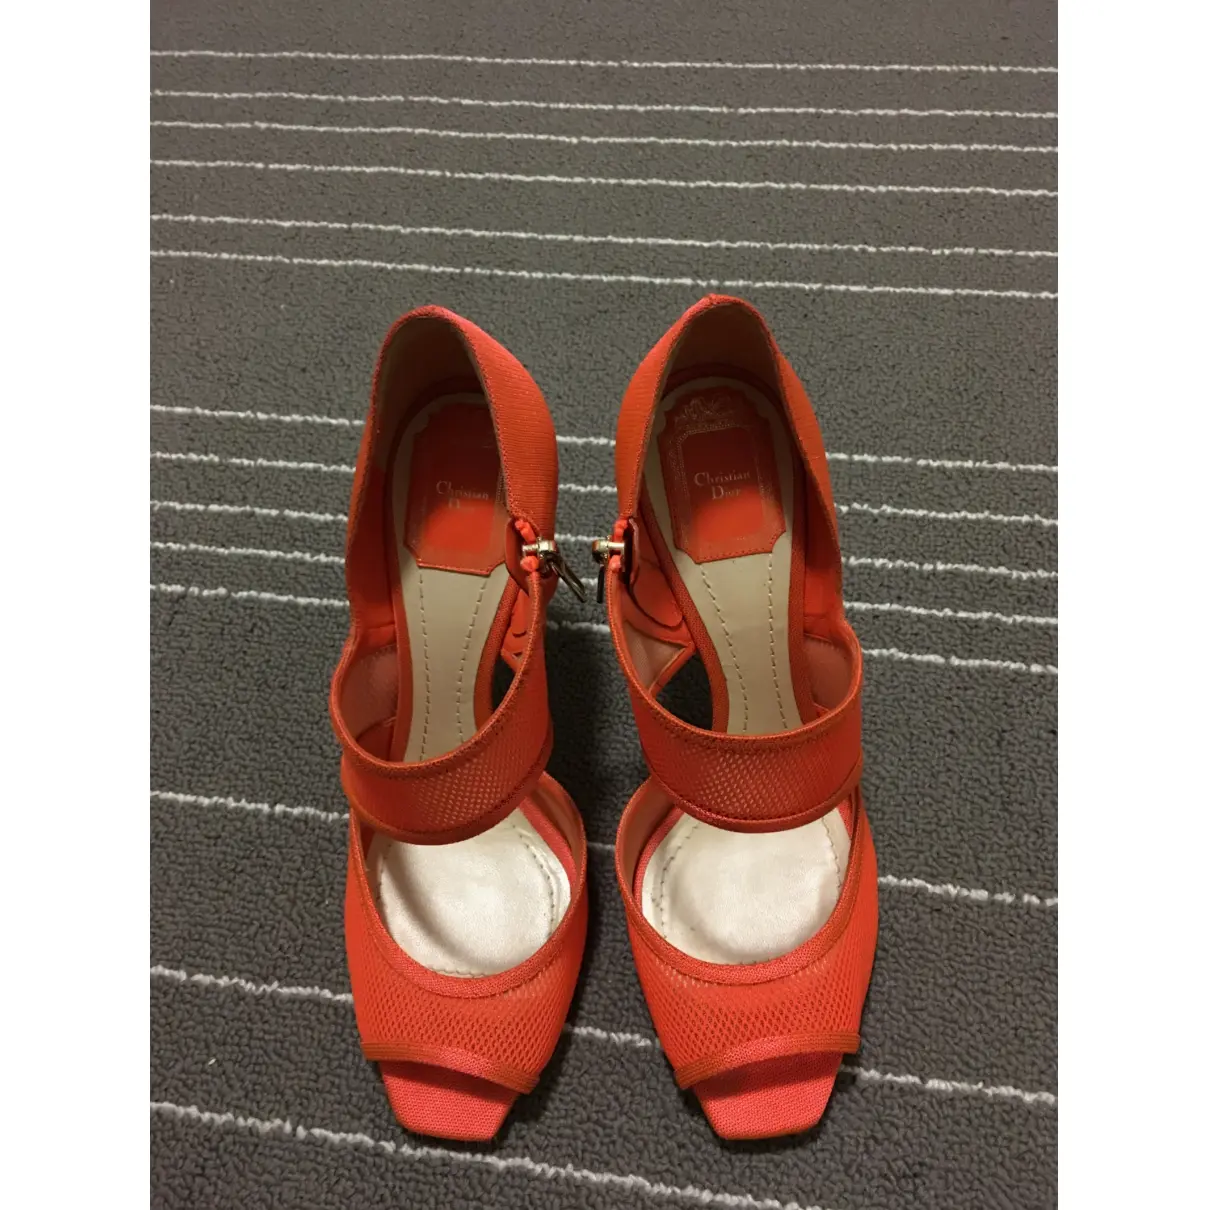 Buy Dior Cloth heels online